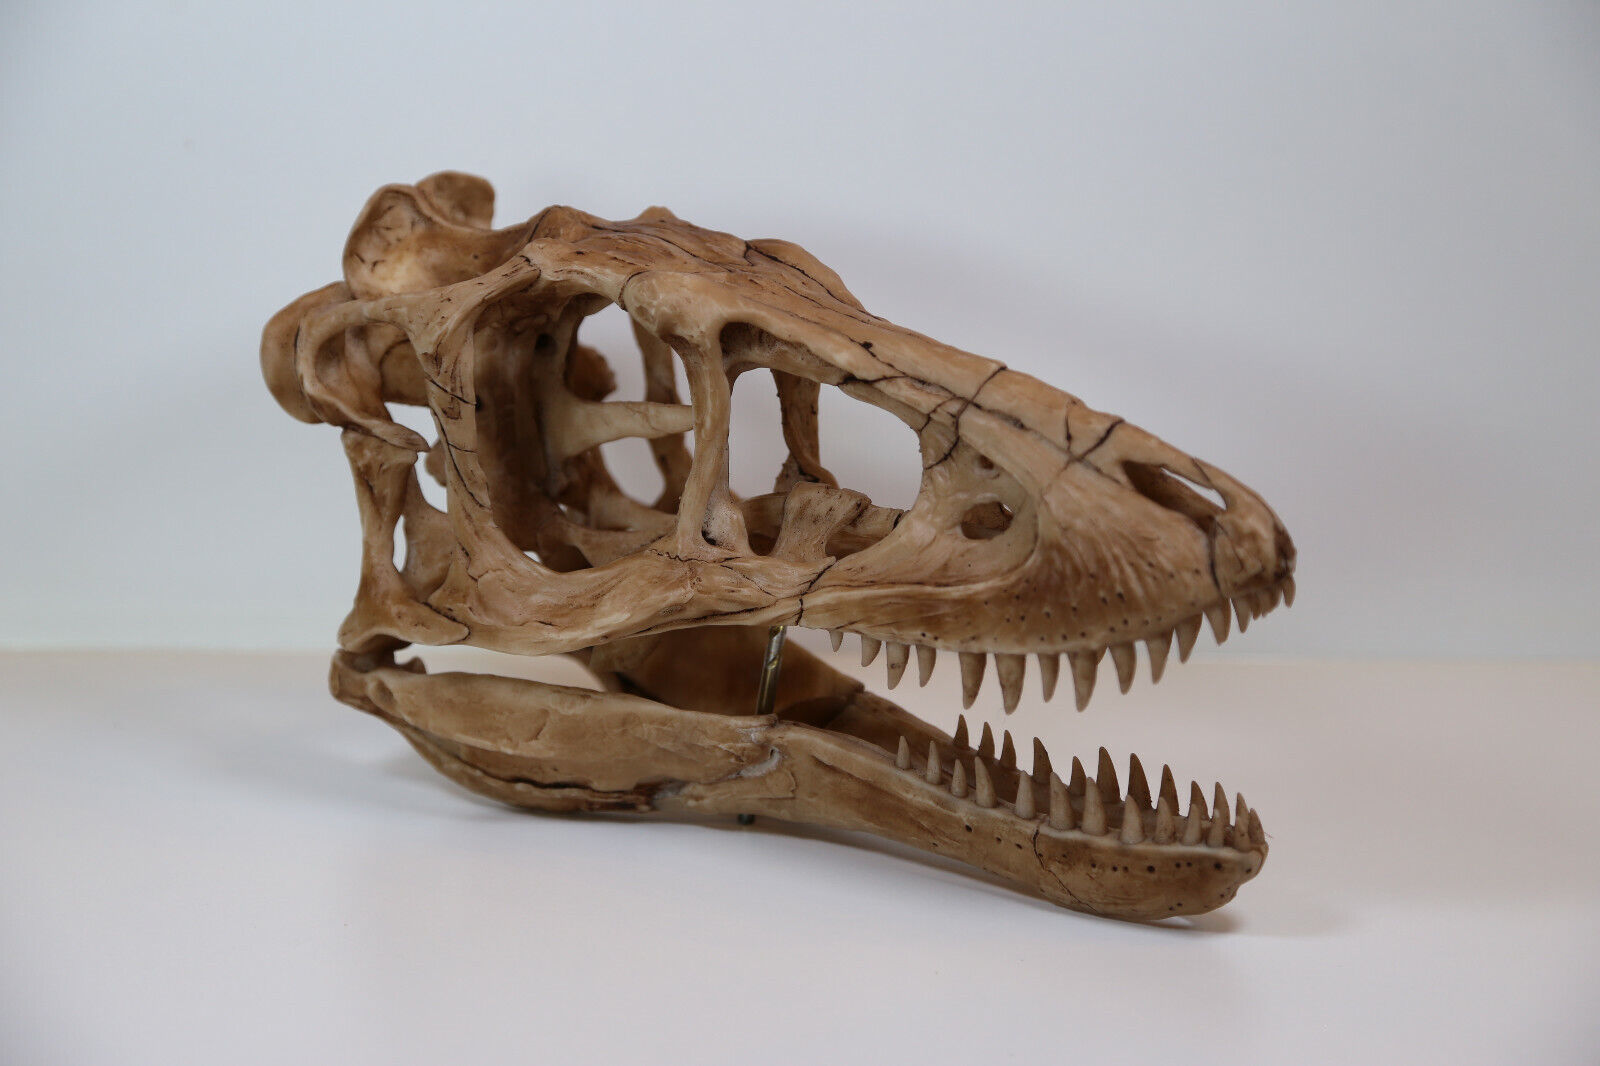 Baby Tyrannosaurus rex Skull - high quality replica - FREE world wide shipping.